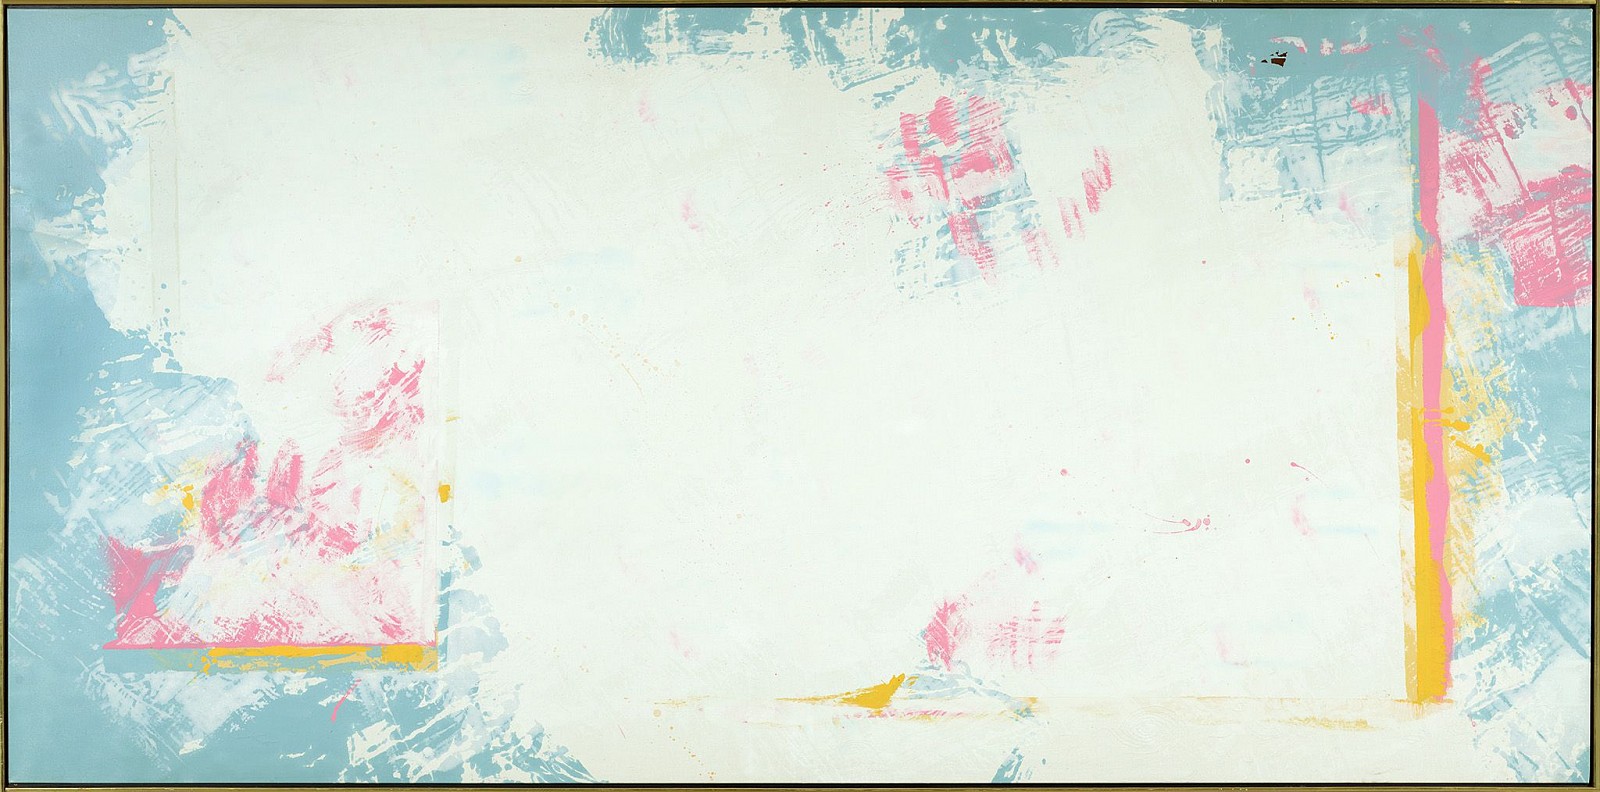 Walter Darby Bannard, Peace & Purity #1, 1970
Acrylic on linen, 57 x 116 in. (144.8 x 294.6 cm)
BAN-00219